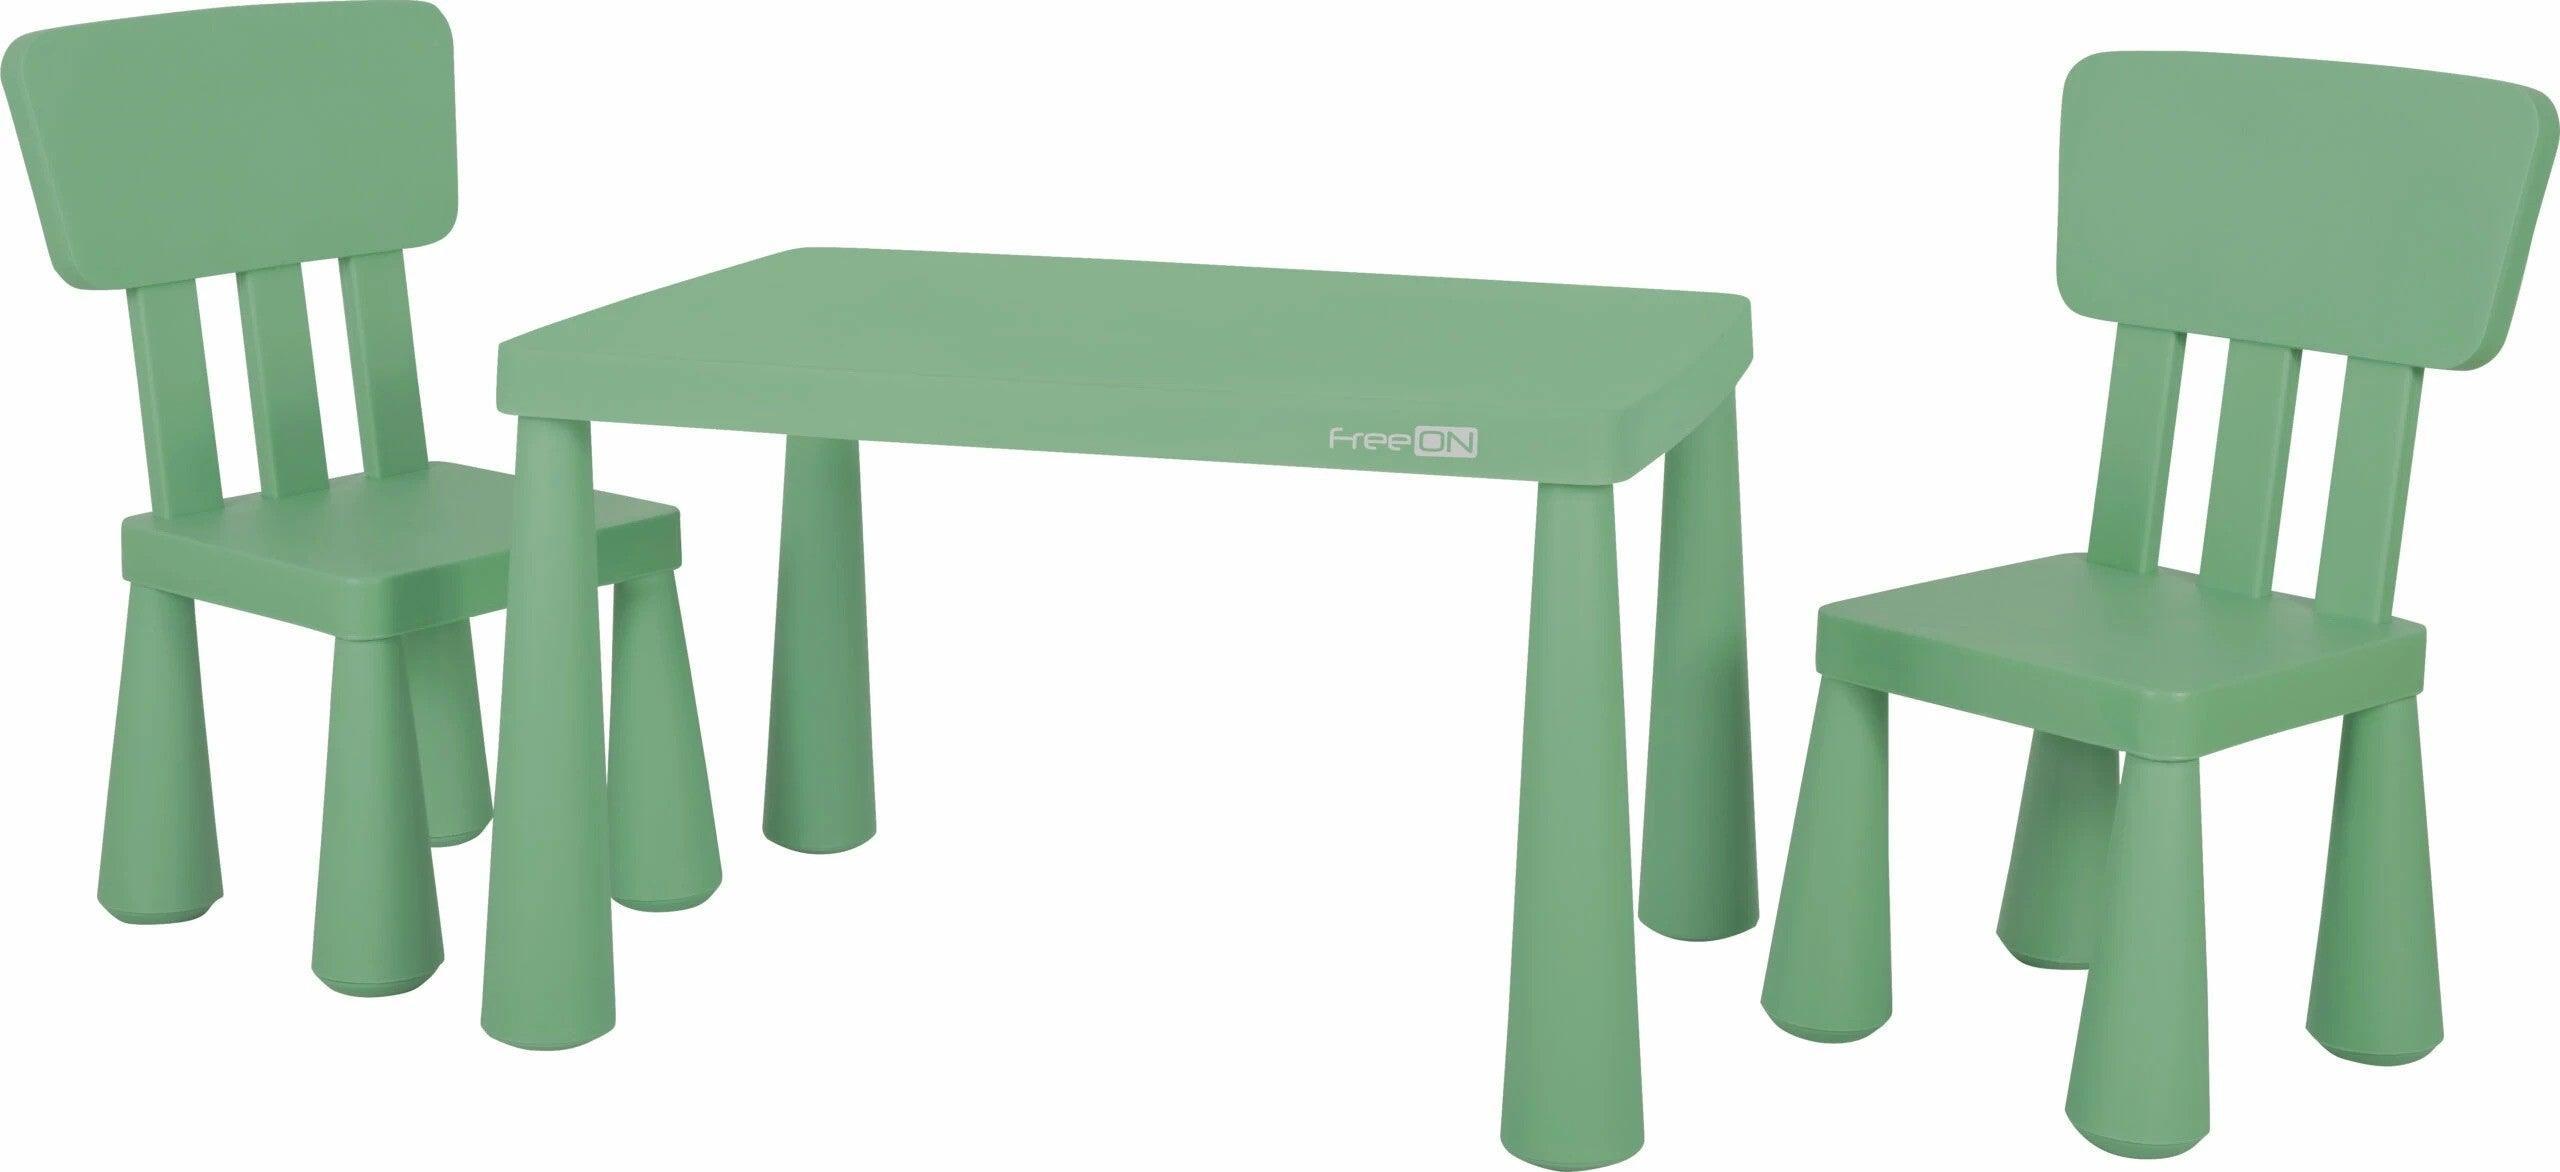 FreeOn - FreeOn Plastic Table with Chairs - Mari Kali Stores Cyprus